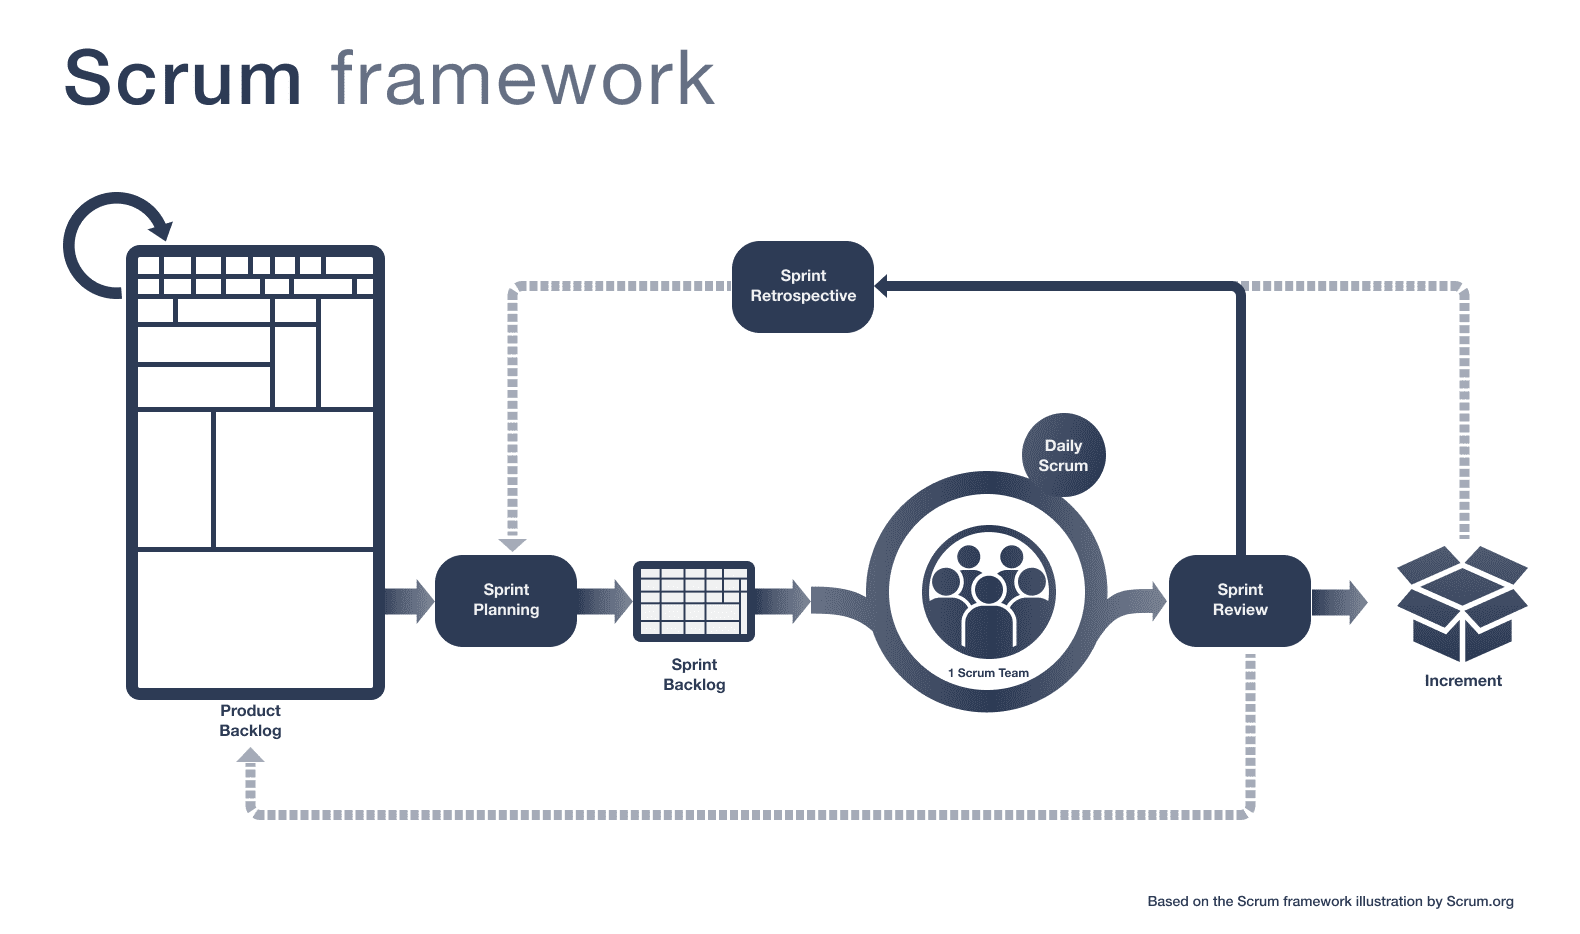 The Scrum Framework at a glance